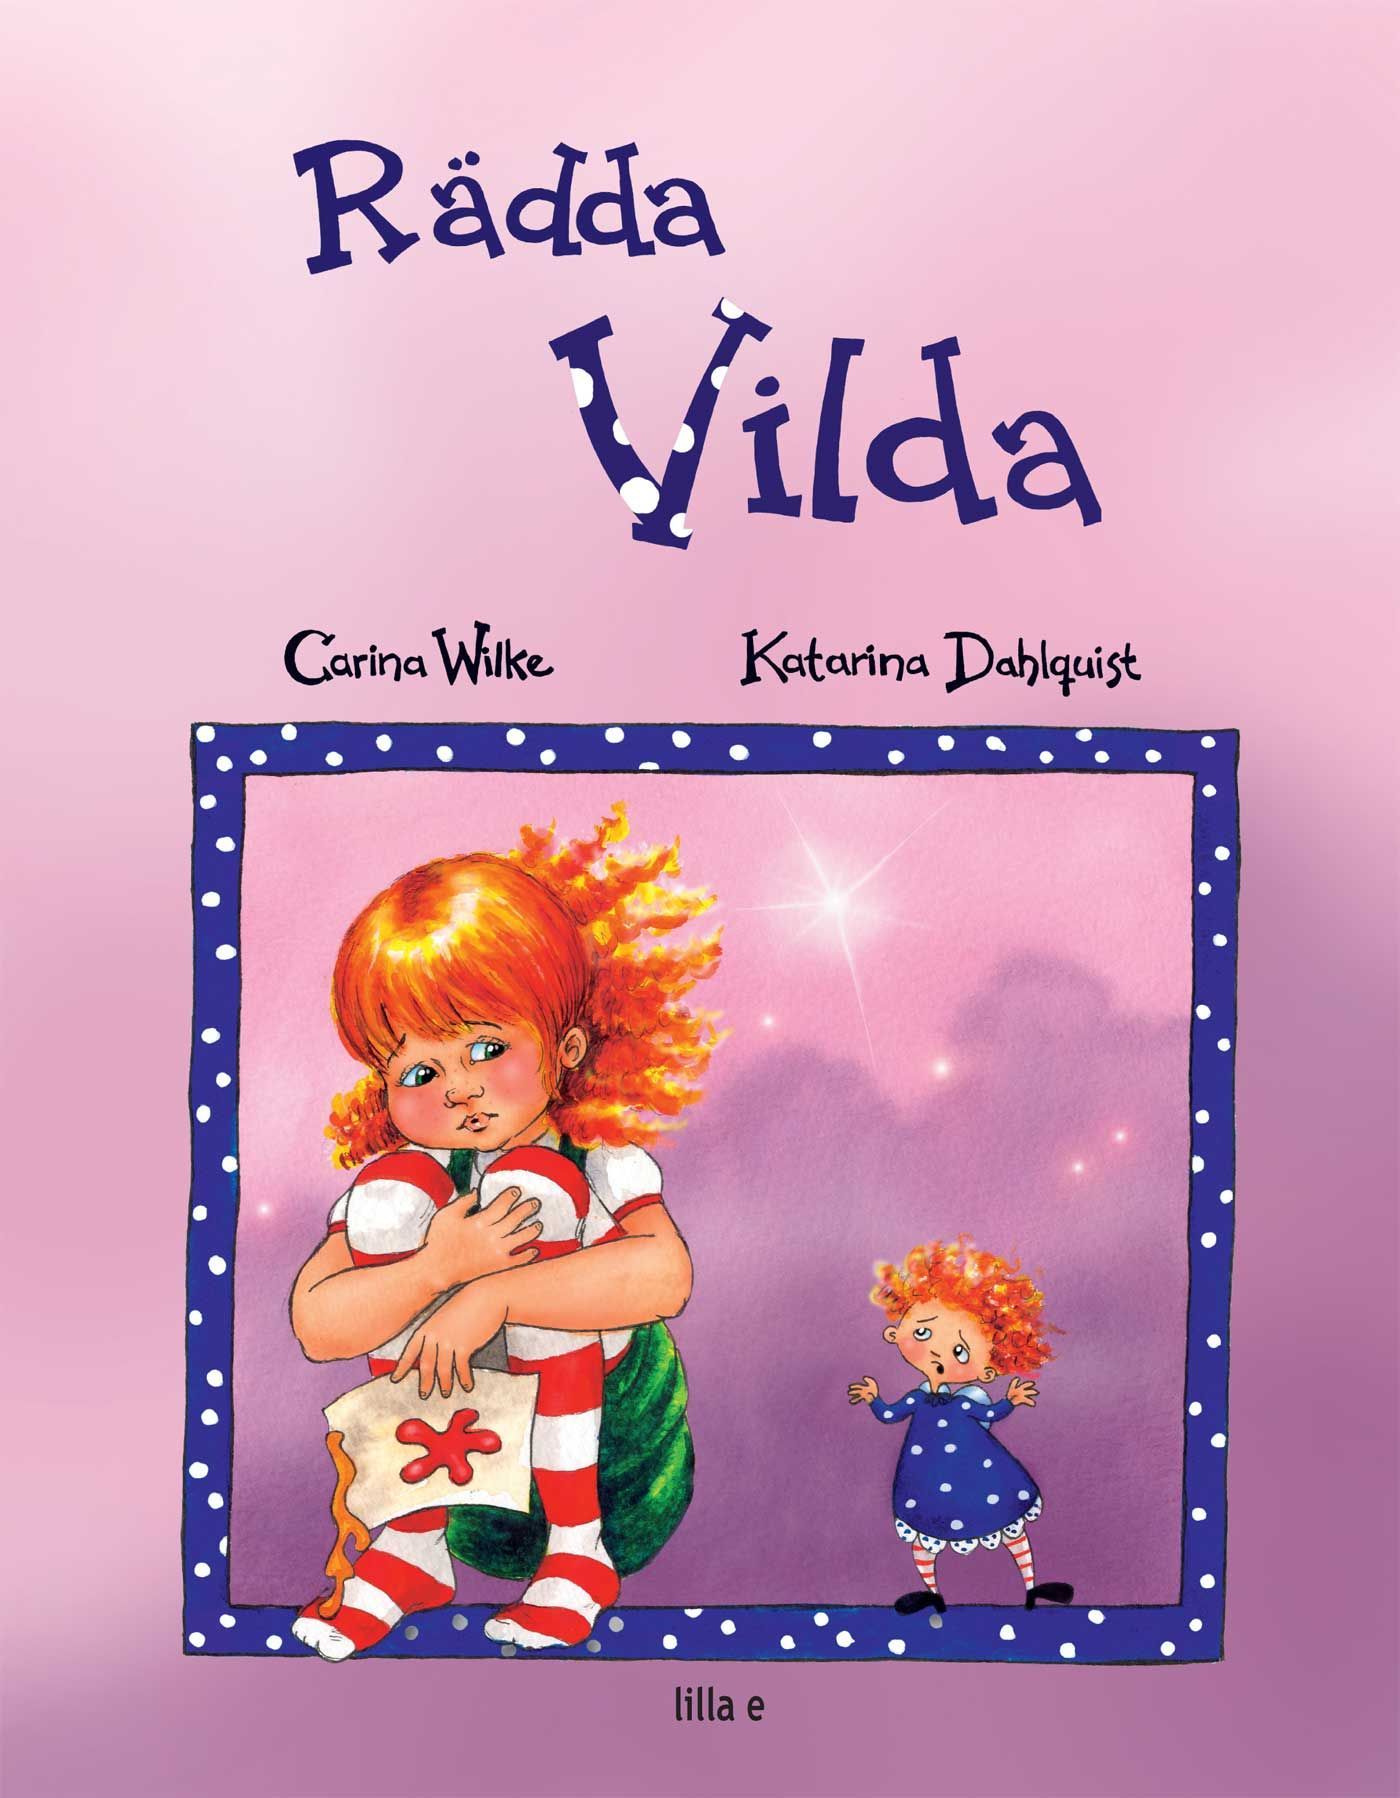 Rädda Vilda /Rädda Molly, eBook by Carina Wilke